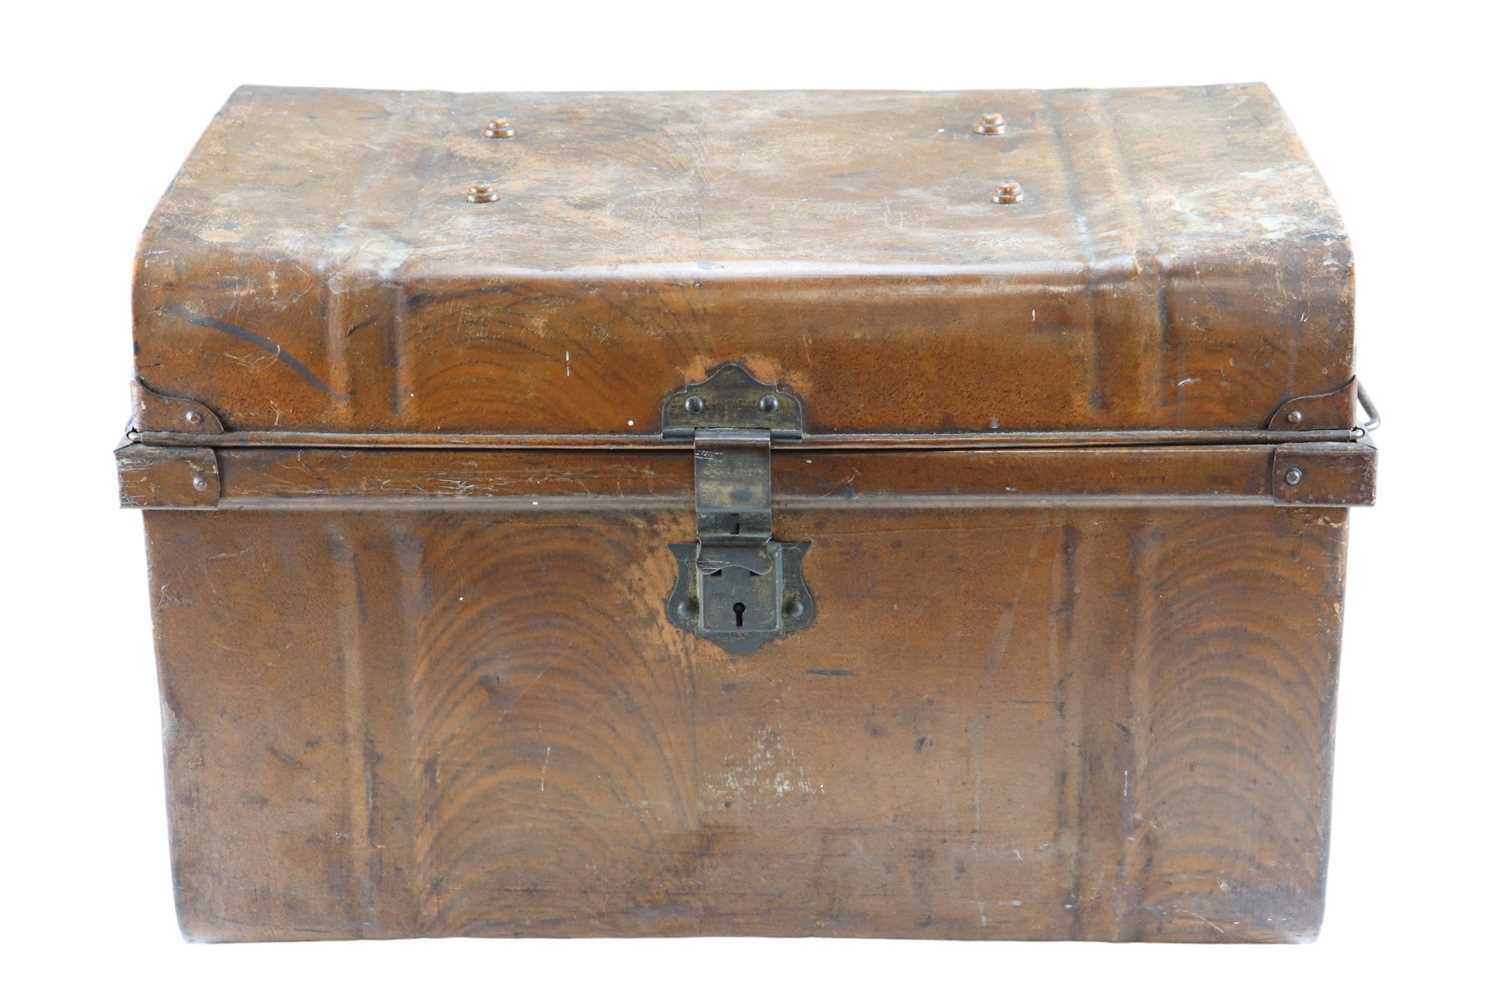 A Victorian scumbled tinplate luggage trunk, 60 cm x 41 cm x 40 cm - Image 2 of 2